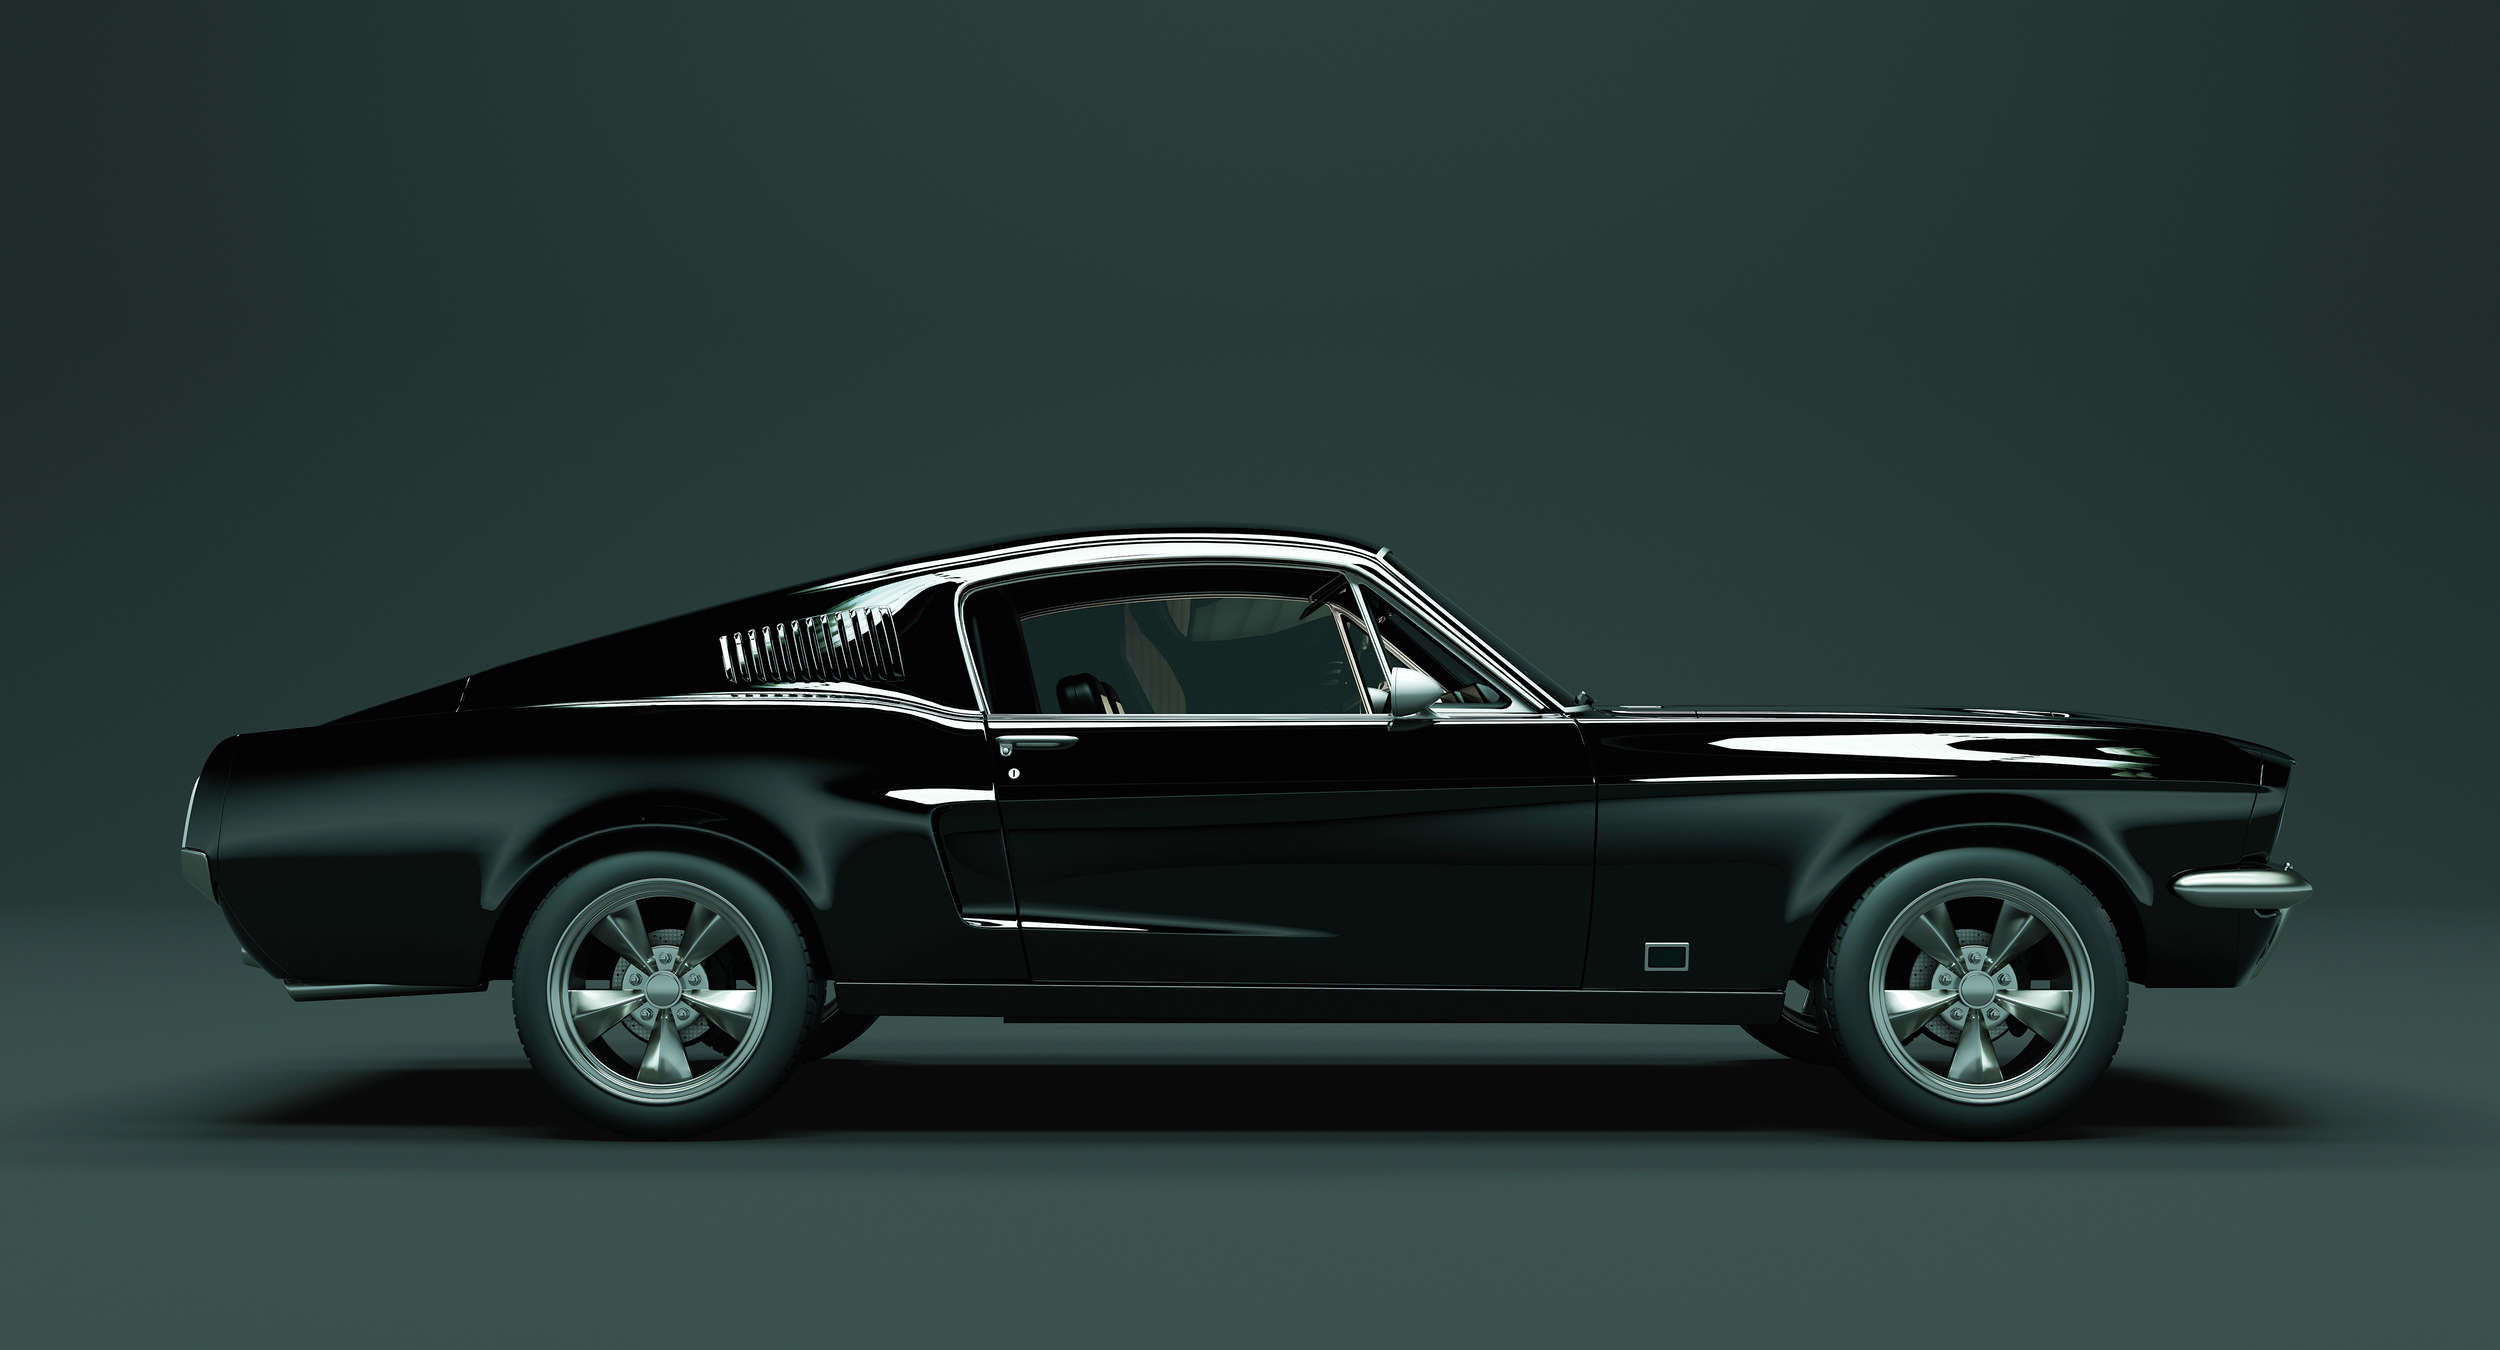             Mustang 1 - Fotomural, Mustang vista lateral, Vintage - Azul, Negro | Lana lisa mate
        